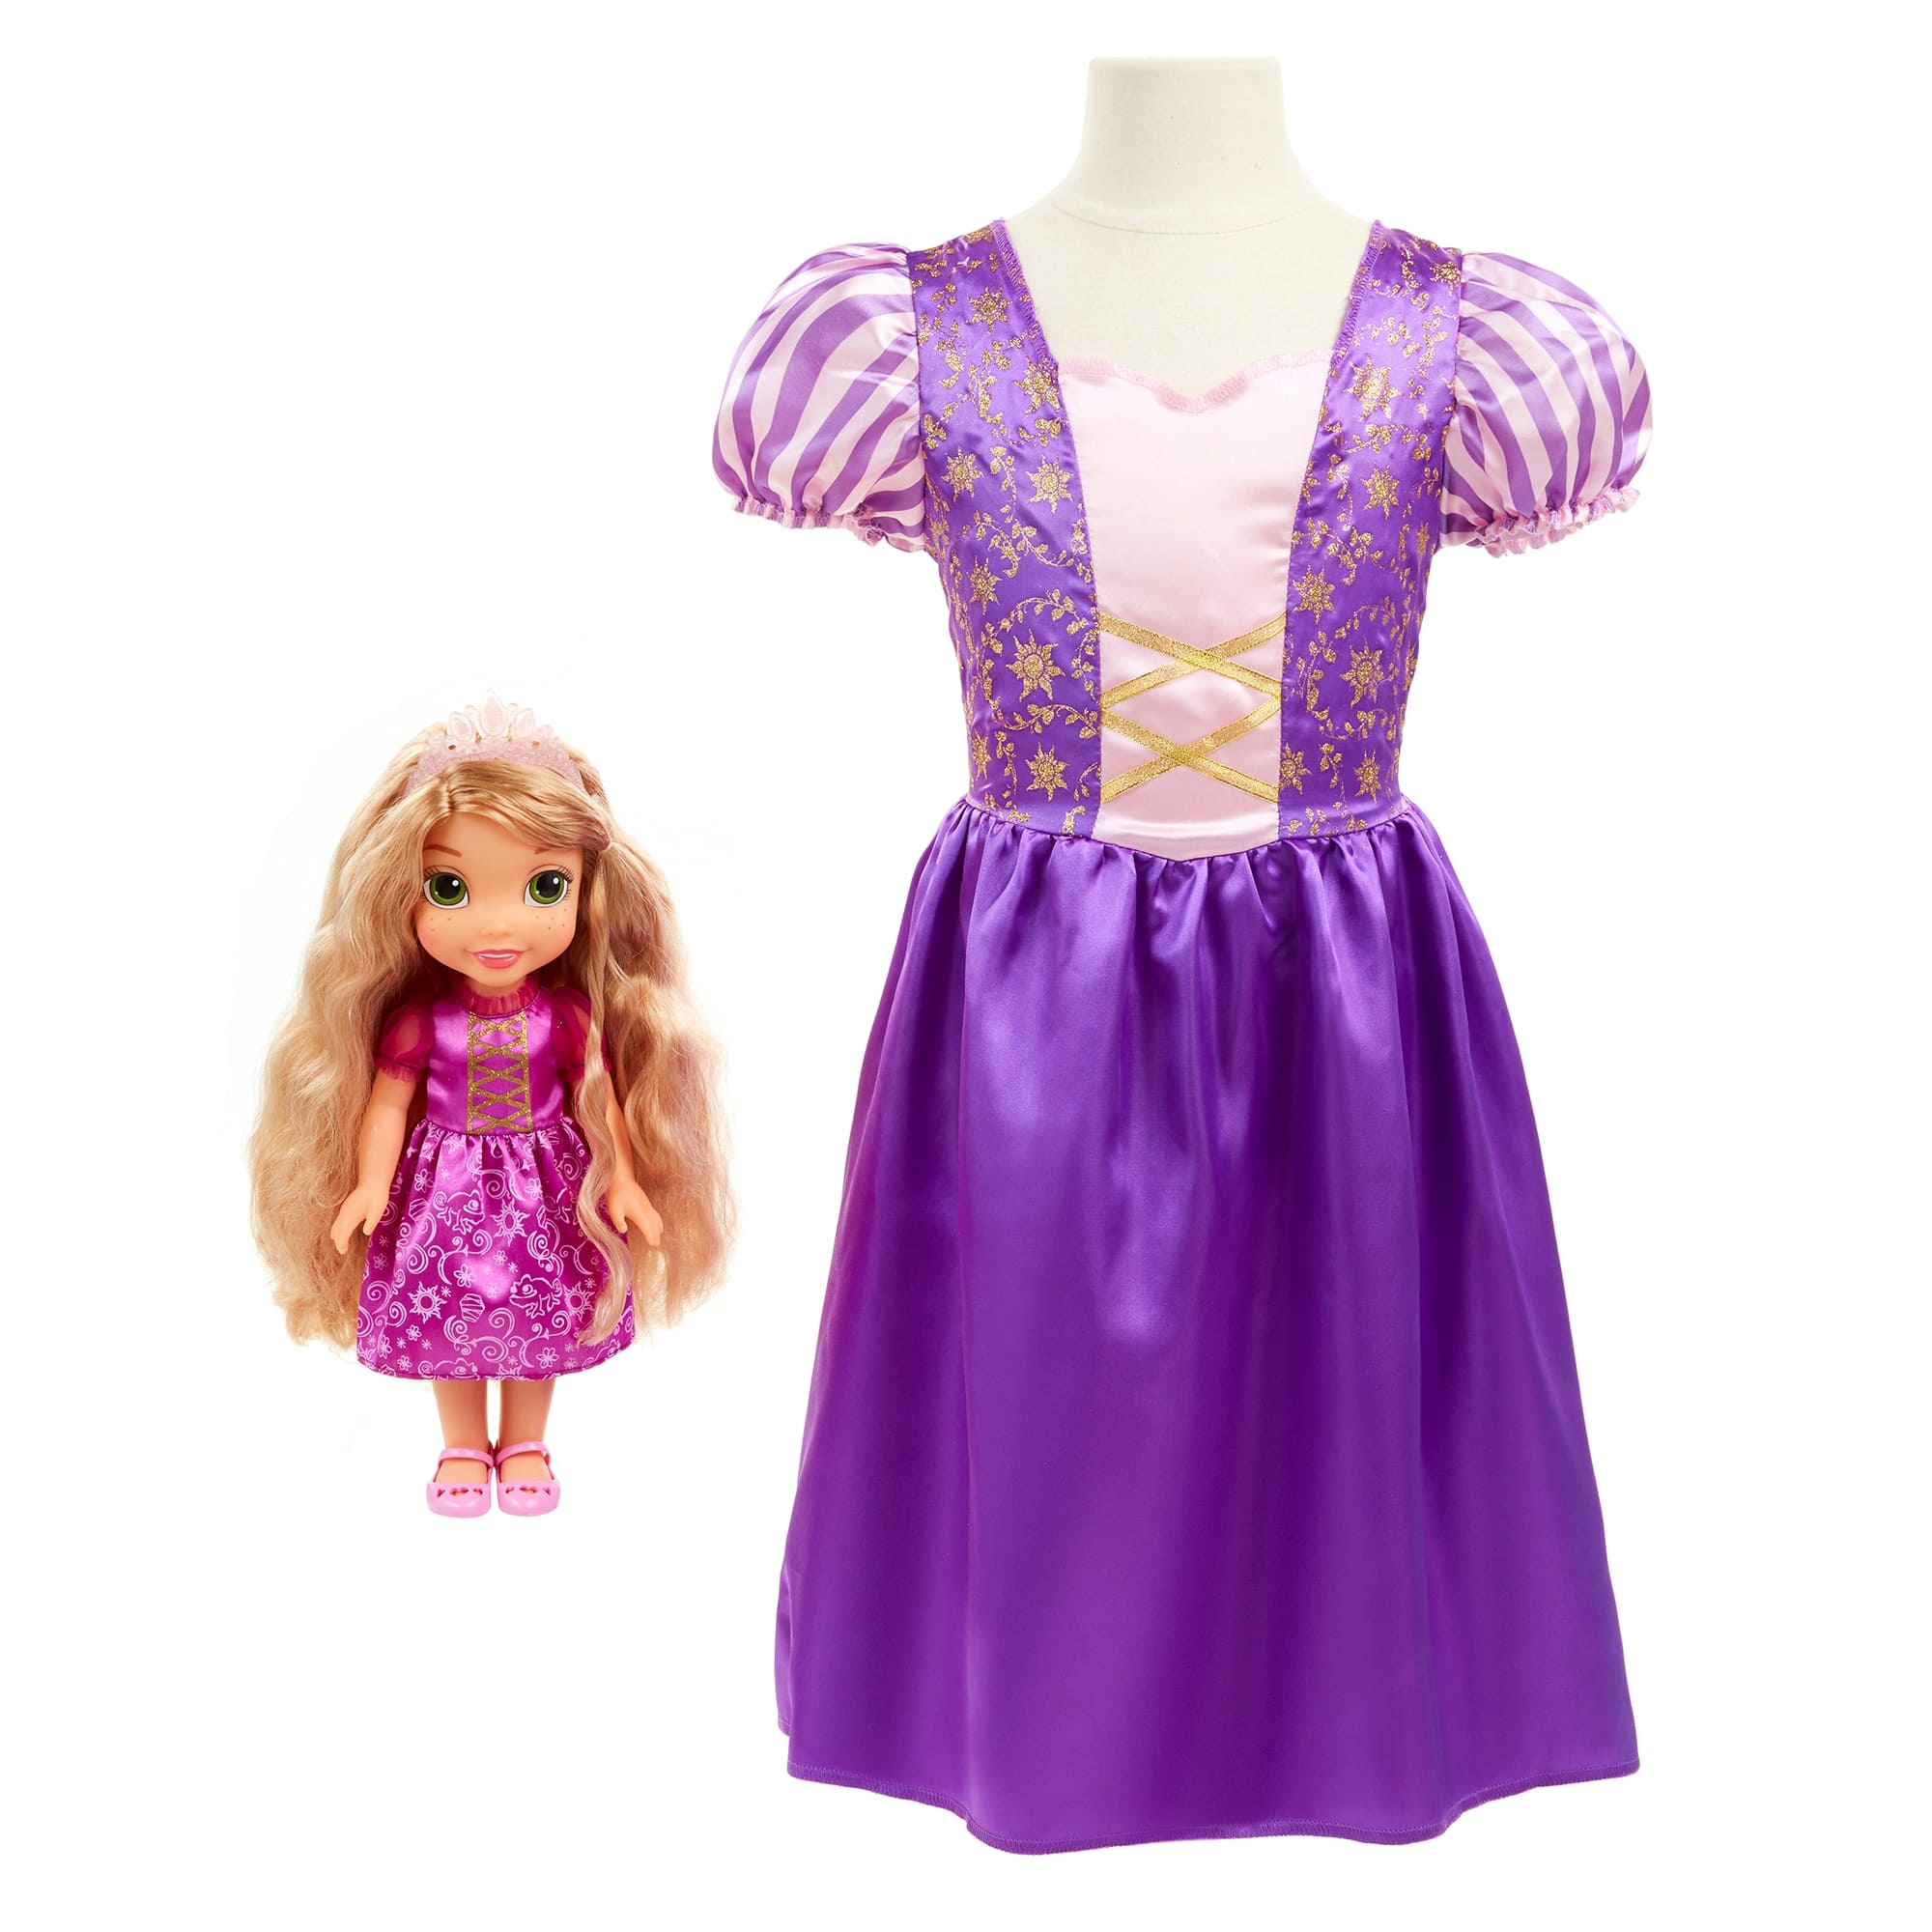 Disney Princess Rapunzel Toddler Doll and Dress - image 1 of 8